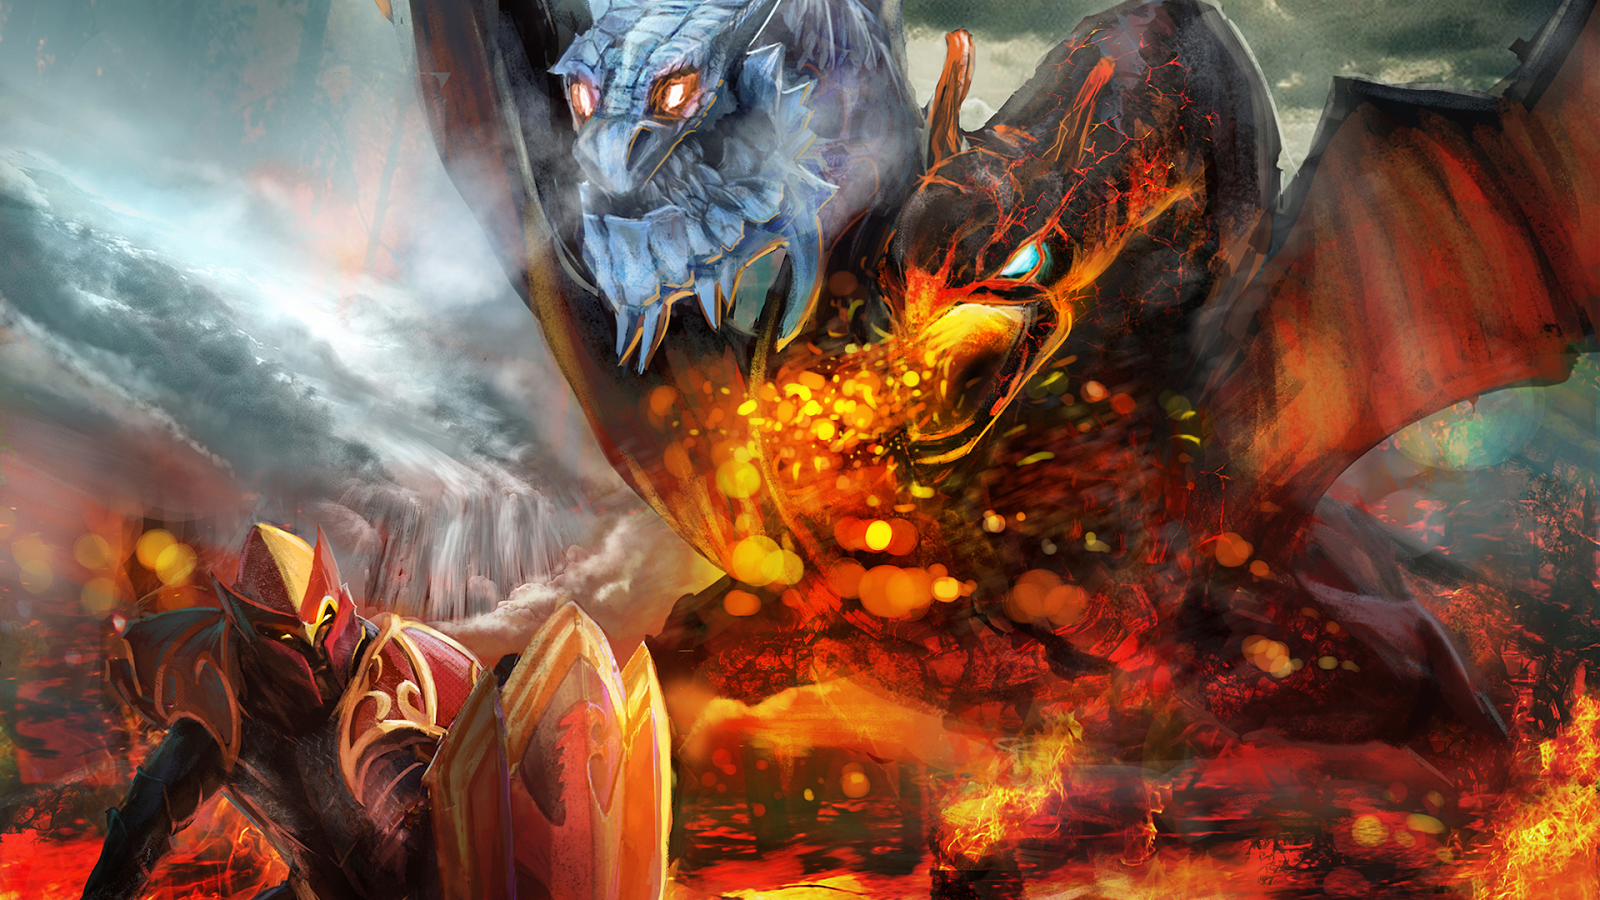 warlock wars dota map 2016 - Defense of The Ancients Games